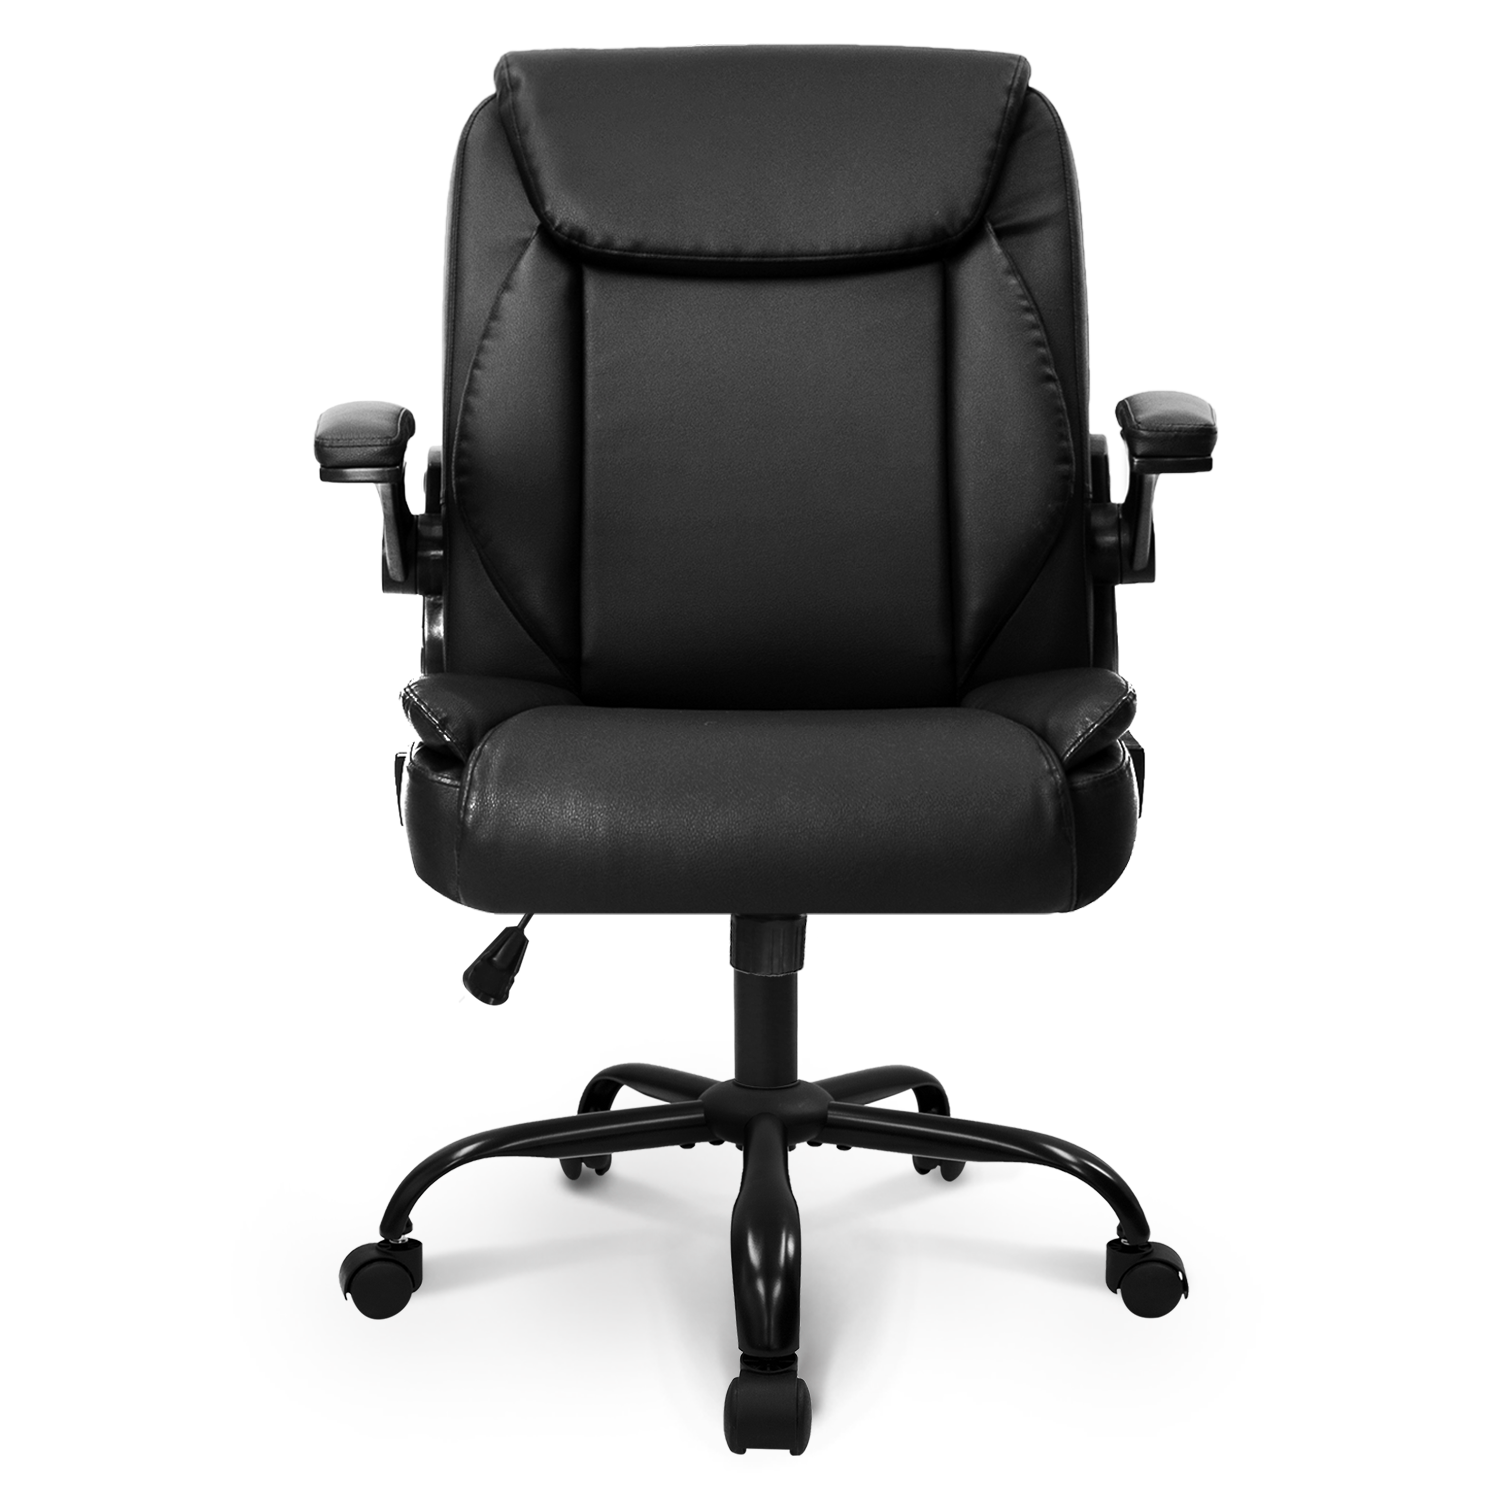 PAC-E Mid Back Modern Executive Chair